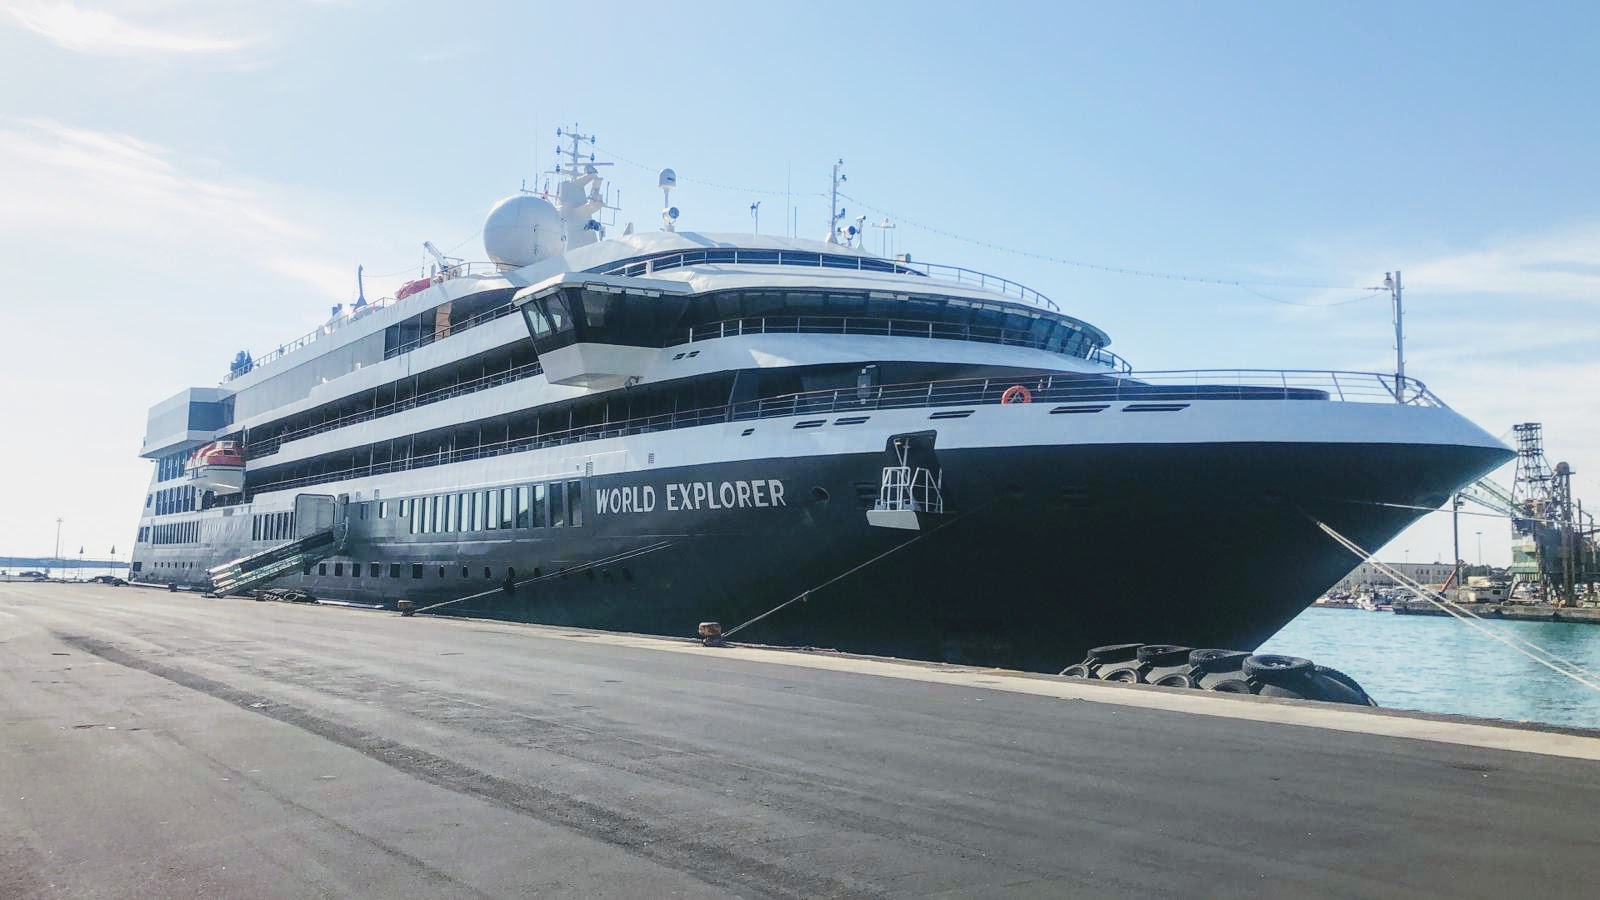 World Explorer: a luxurious cruise ship at Catania Cruise Port